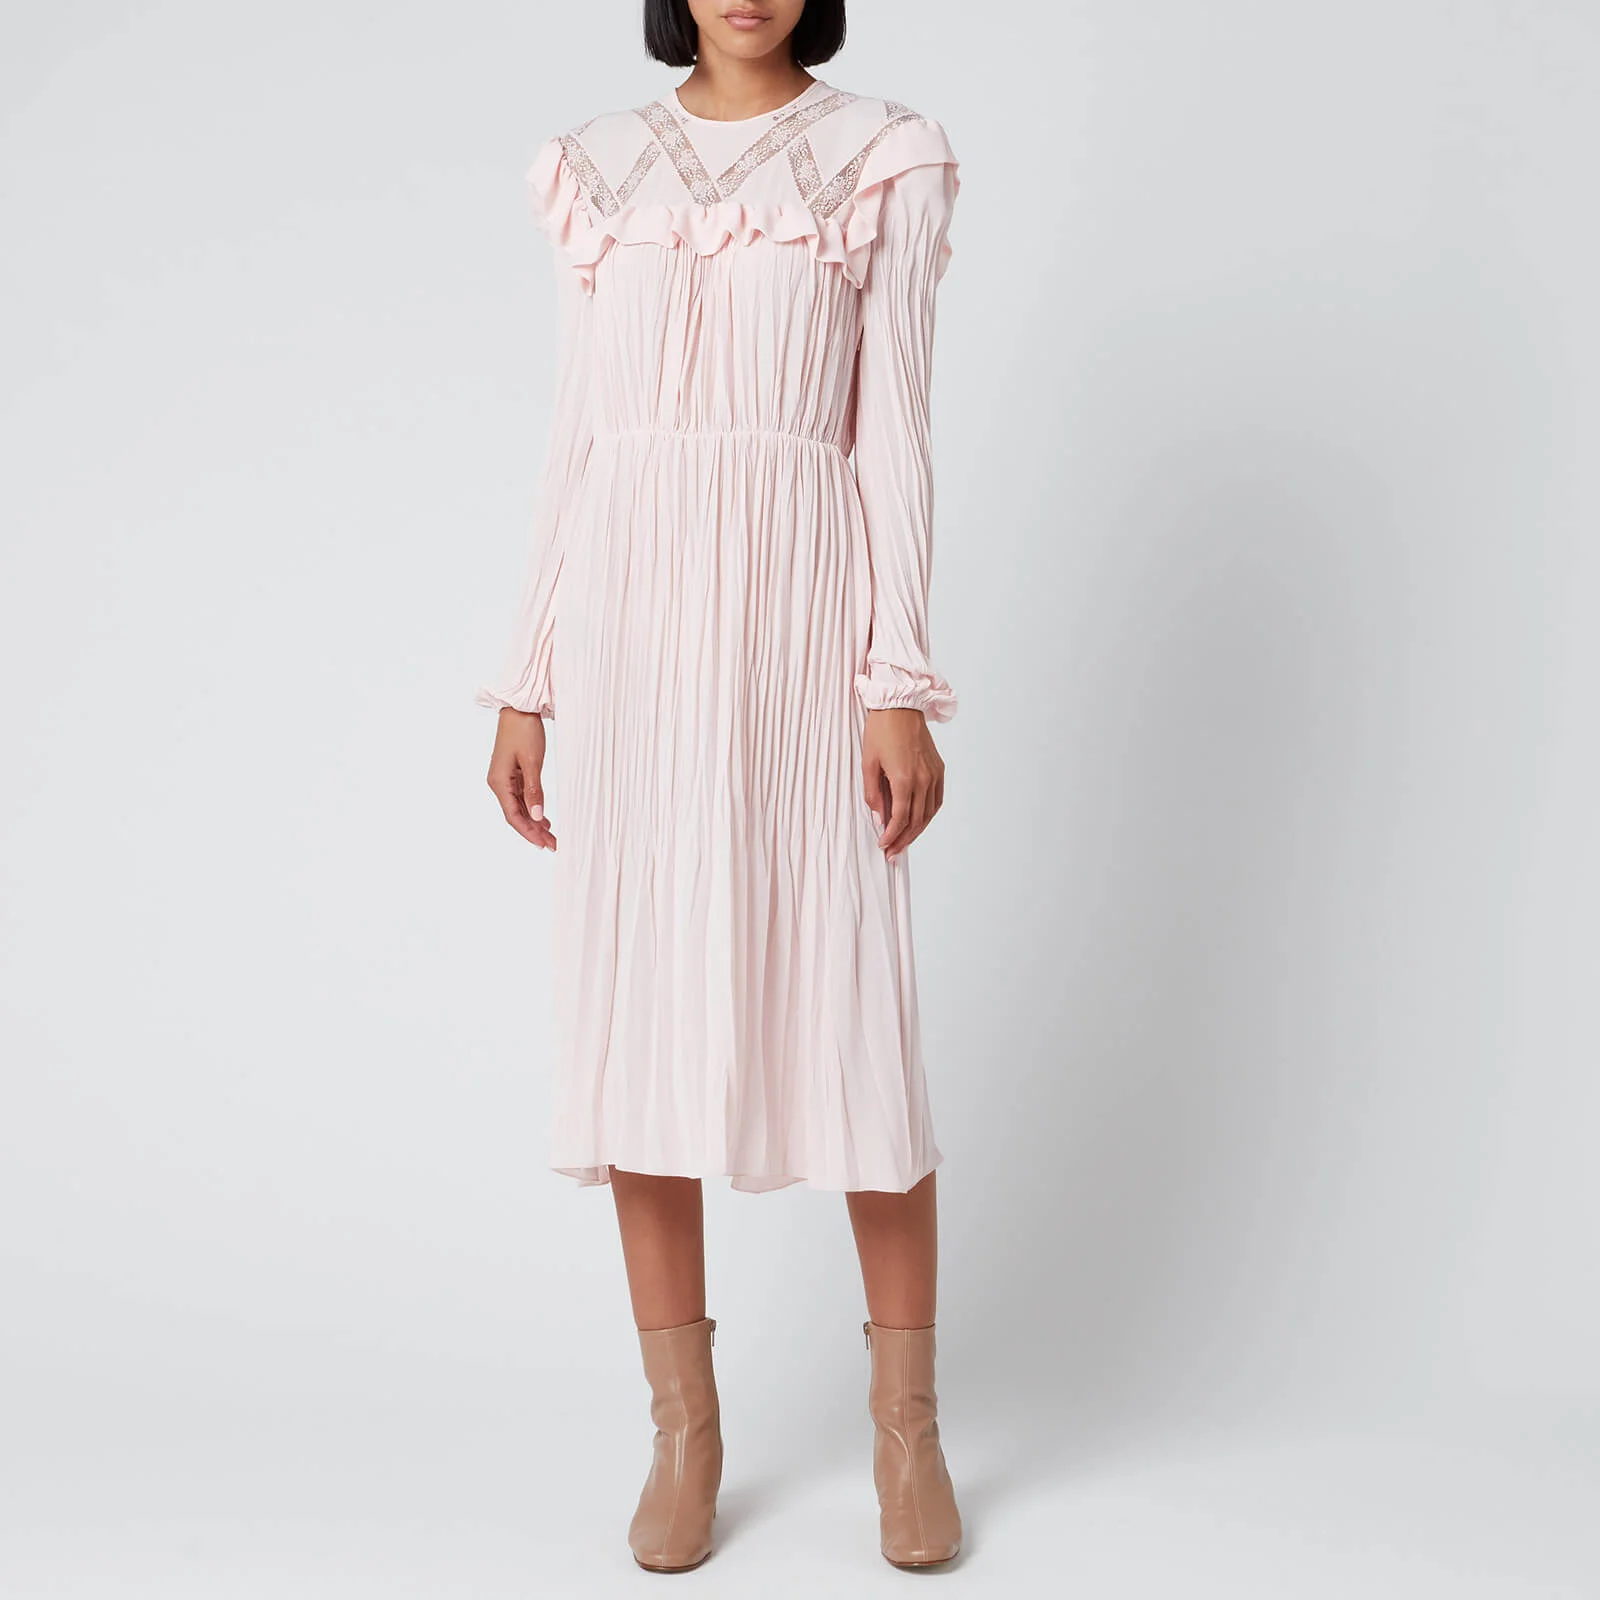 Philosophy di Lorenzo Serafini Women's Ruffled Dress - Pink Image 1